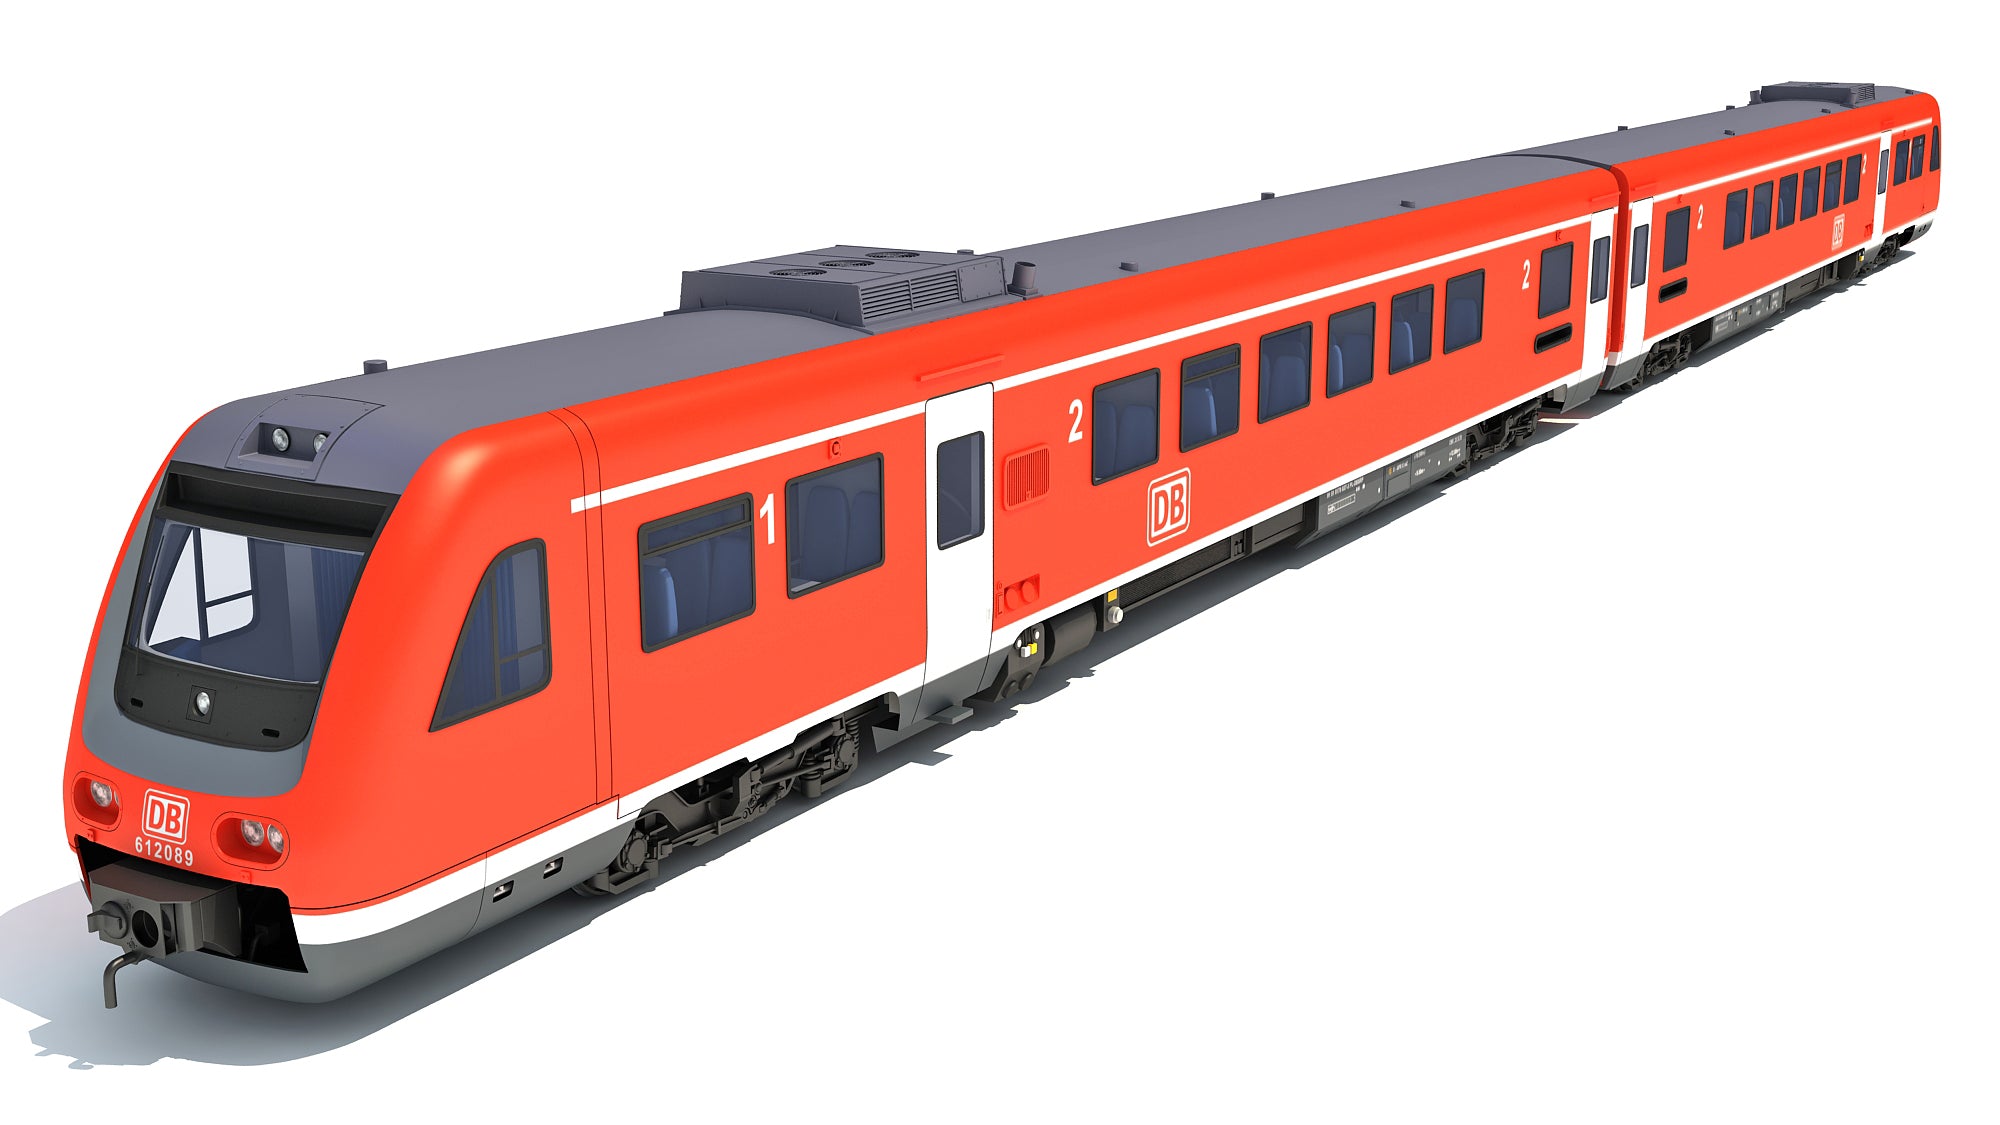 Siemens Desiro Class 642